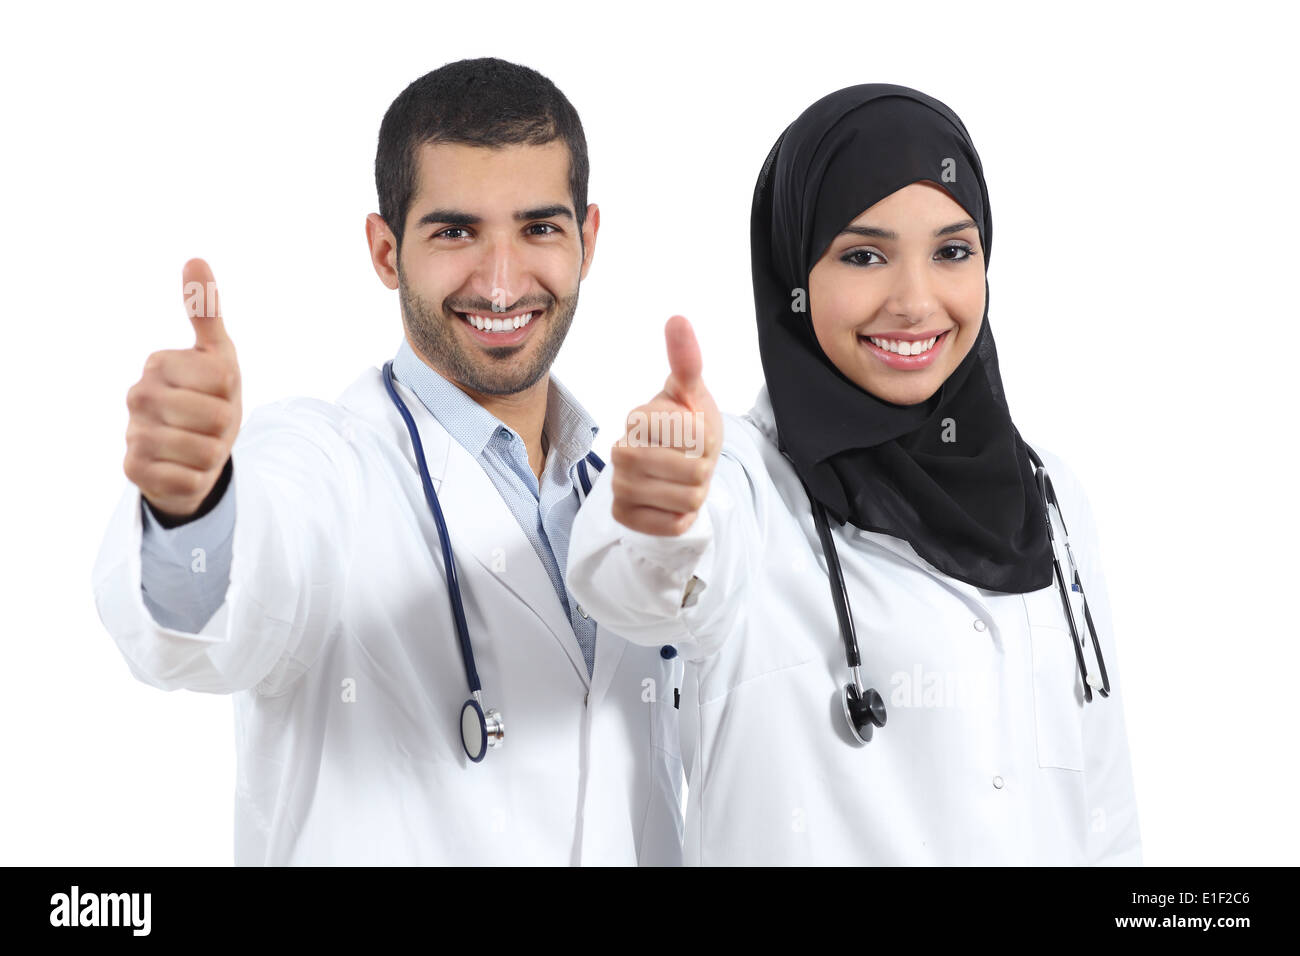 Катар медицина. Арабский врач. Арабская медсестра. Врачи арабки. Врачи Саудовской Аравии.